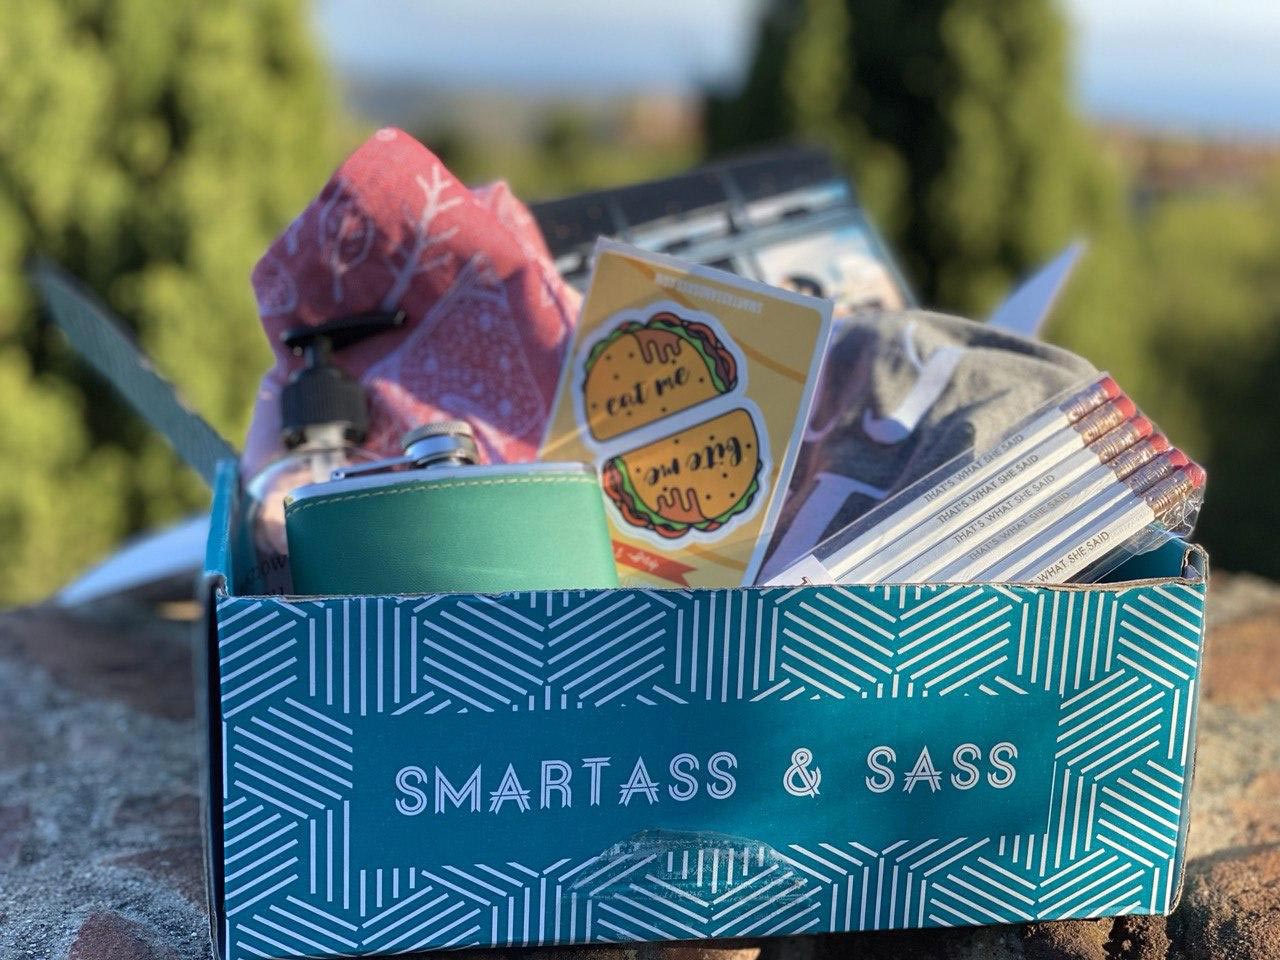 Smartass and Sass Summer Promotion